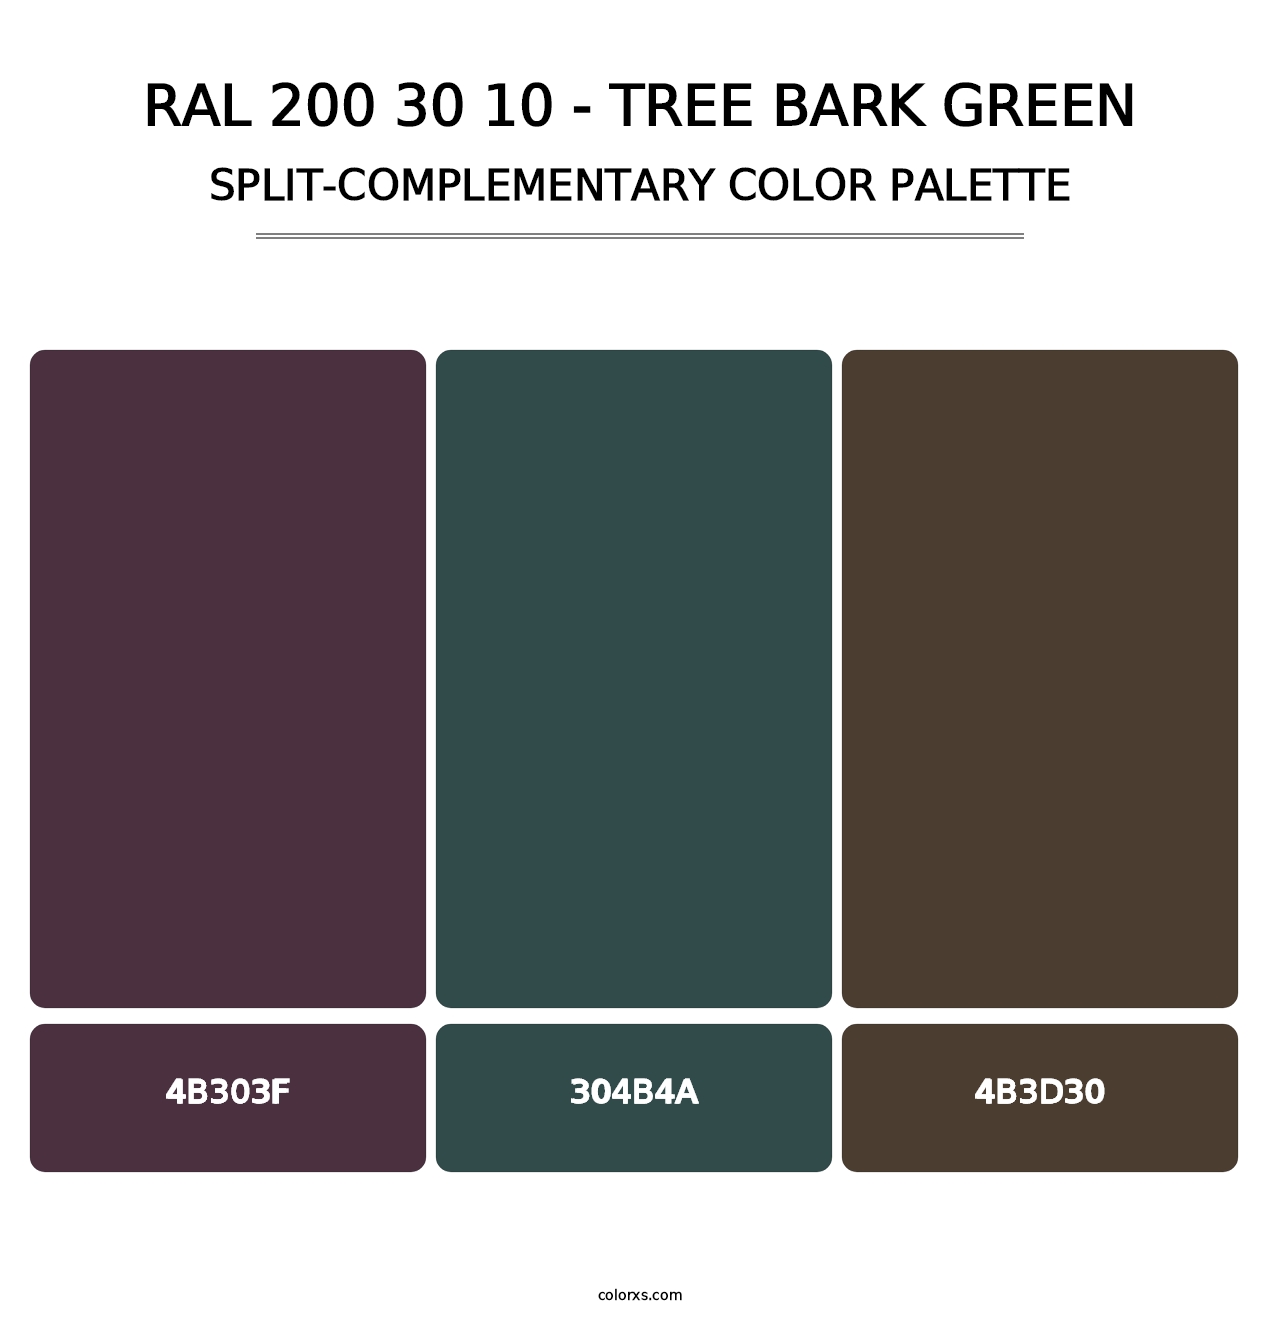 RAL 200 30 10 - Tree Bark Green - Split-Complementary Color Palette